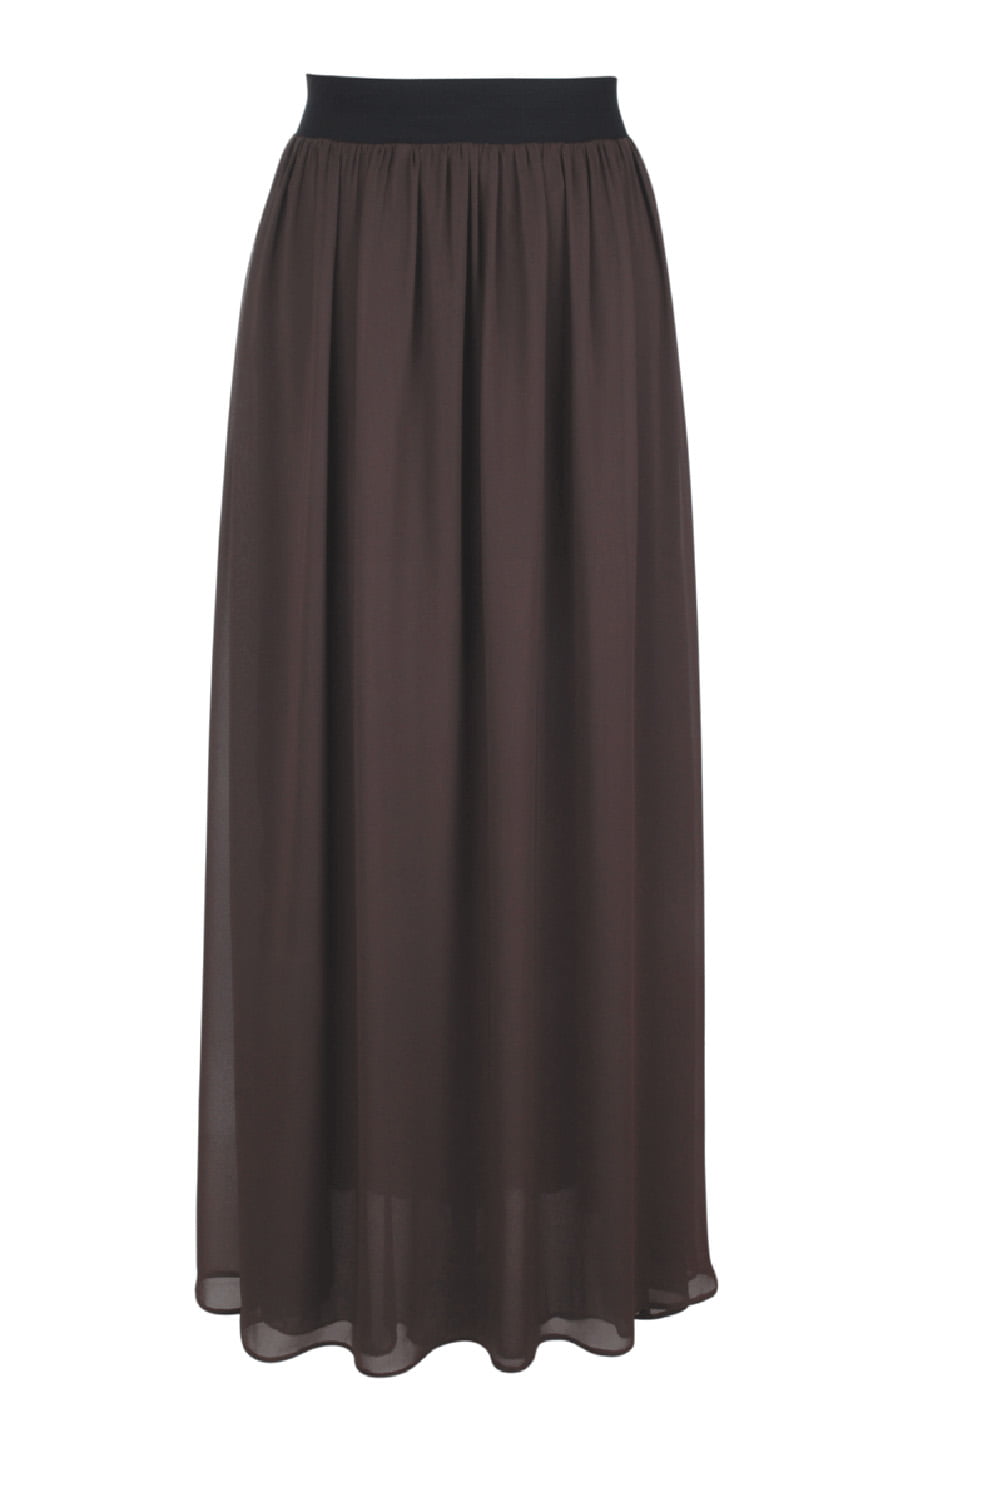 Faship - Faship Women Long Retro Pleated Maxi Skirt Chocolate Brown